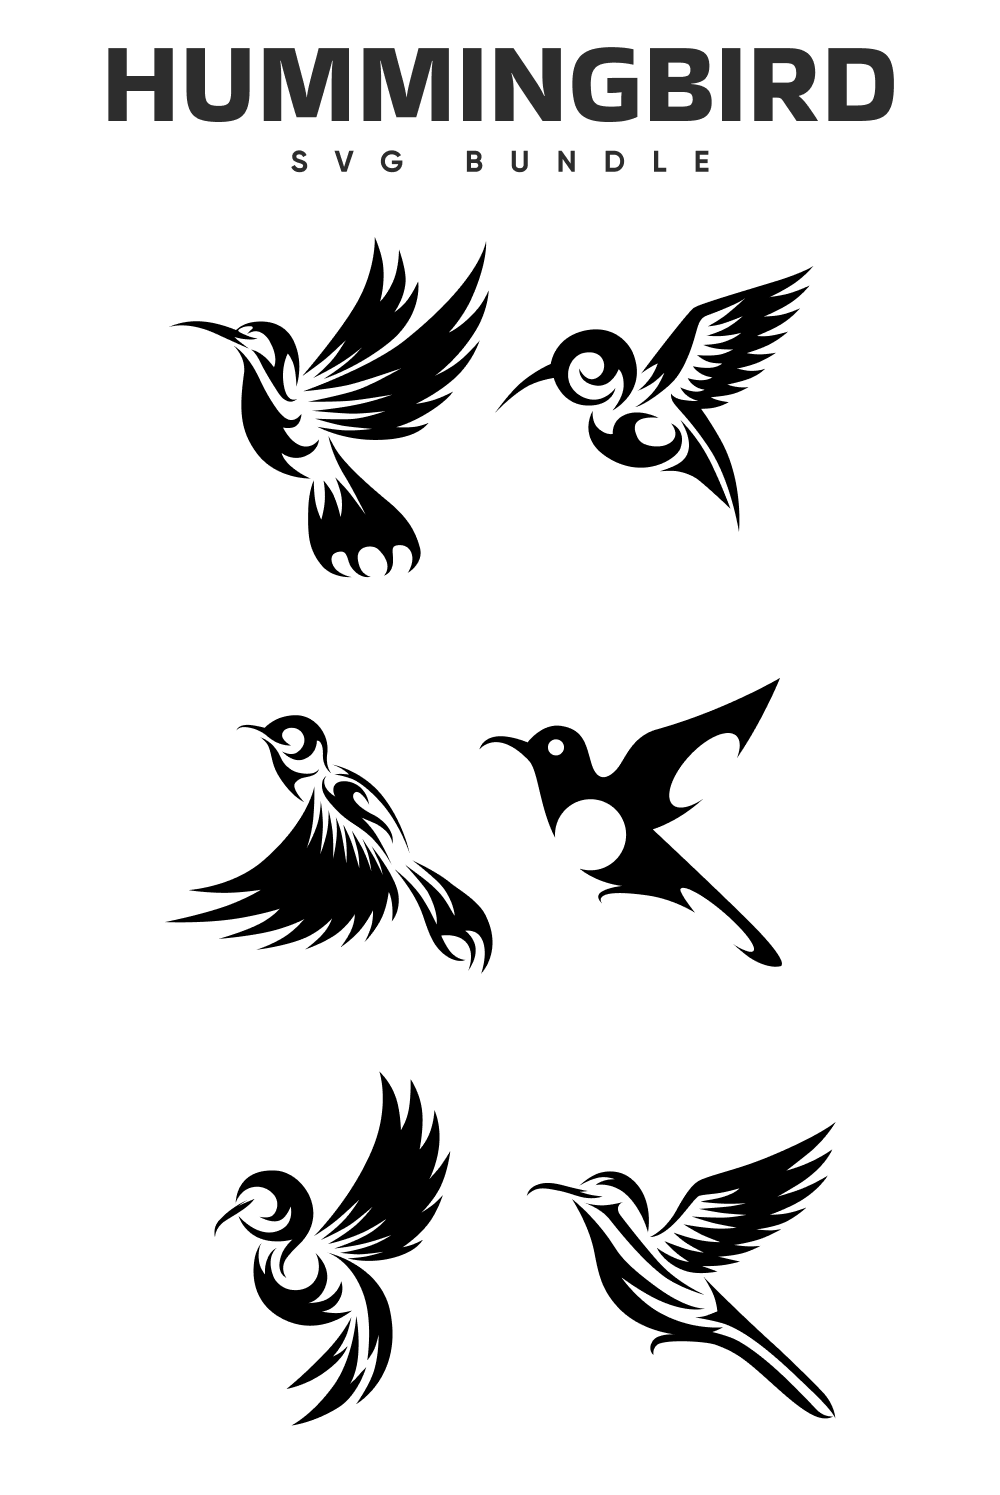 Black and white image of birds flying.